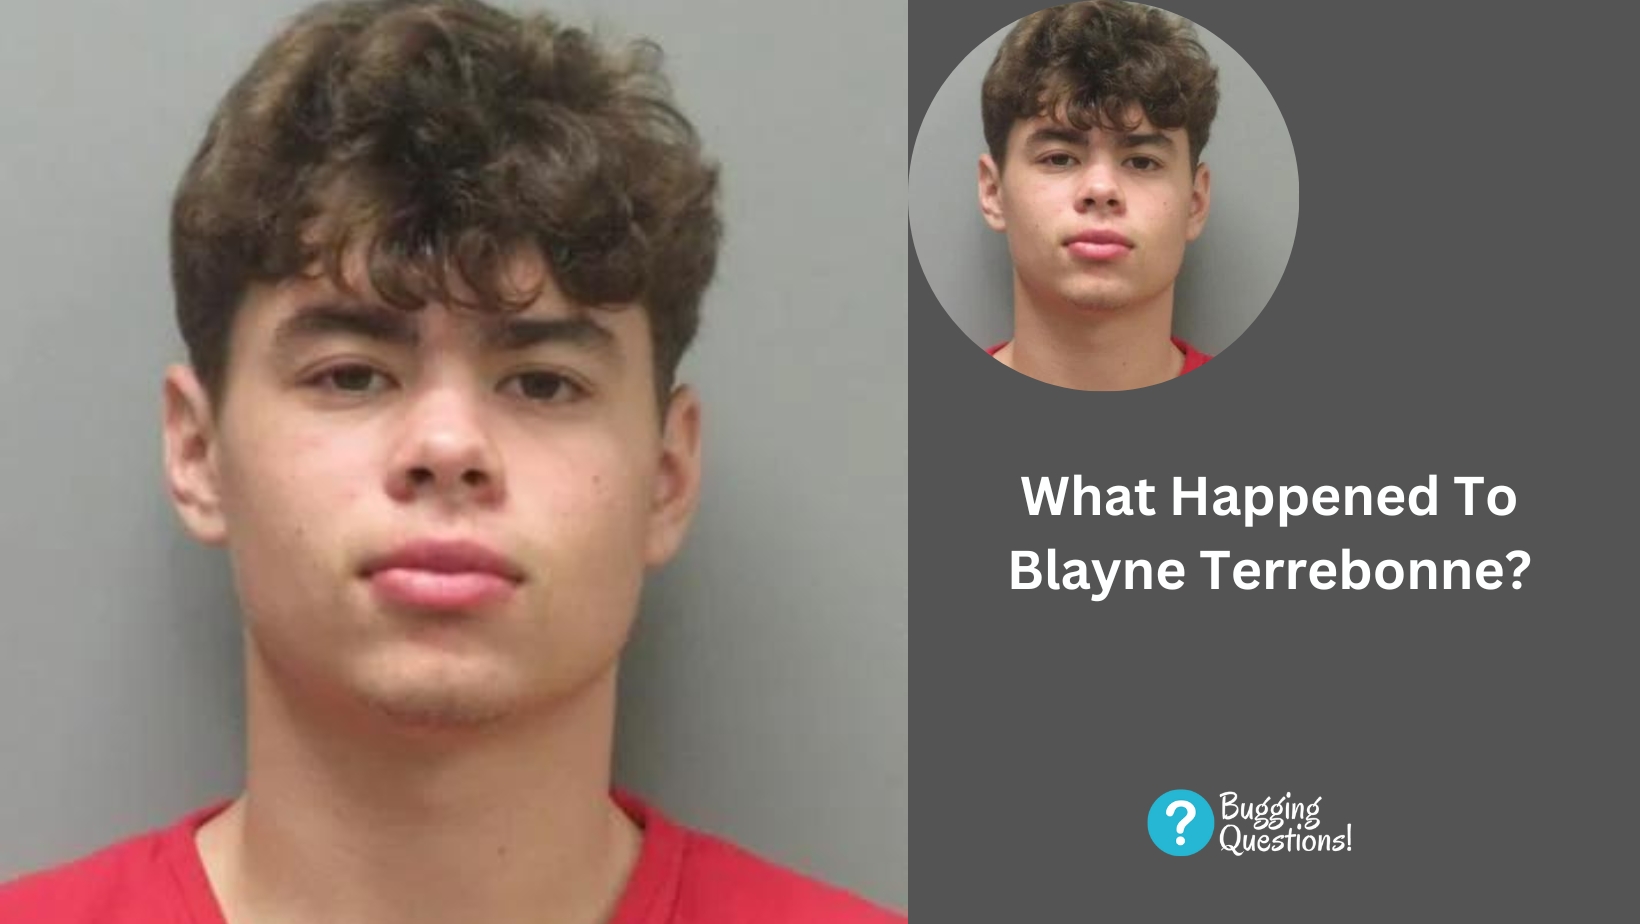 What Happened To Blayne Terrebonne?